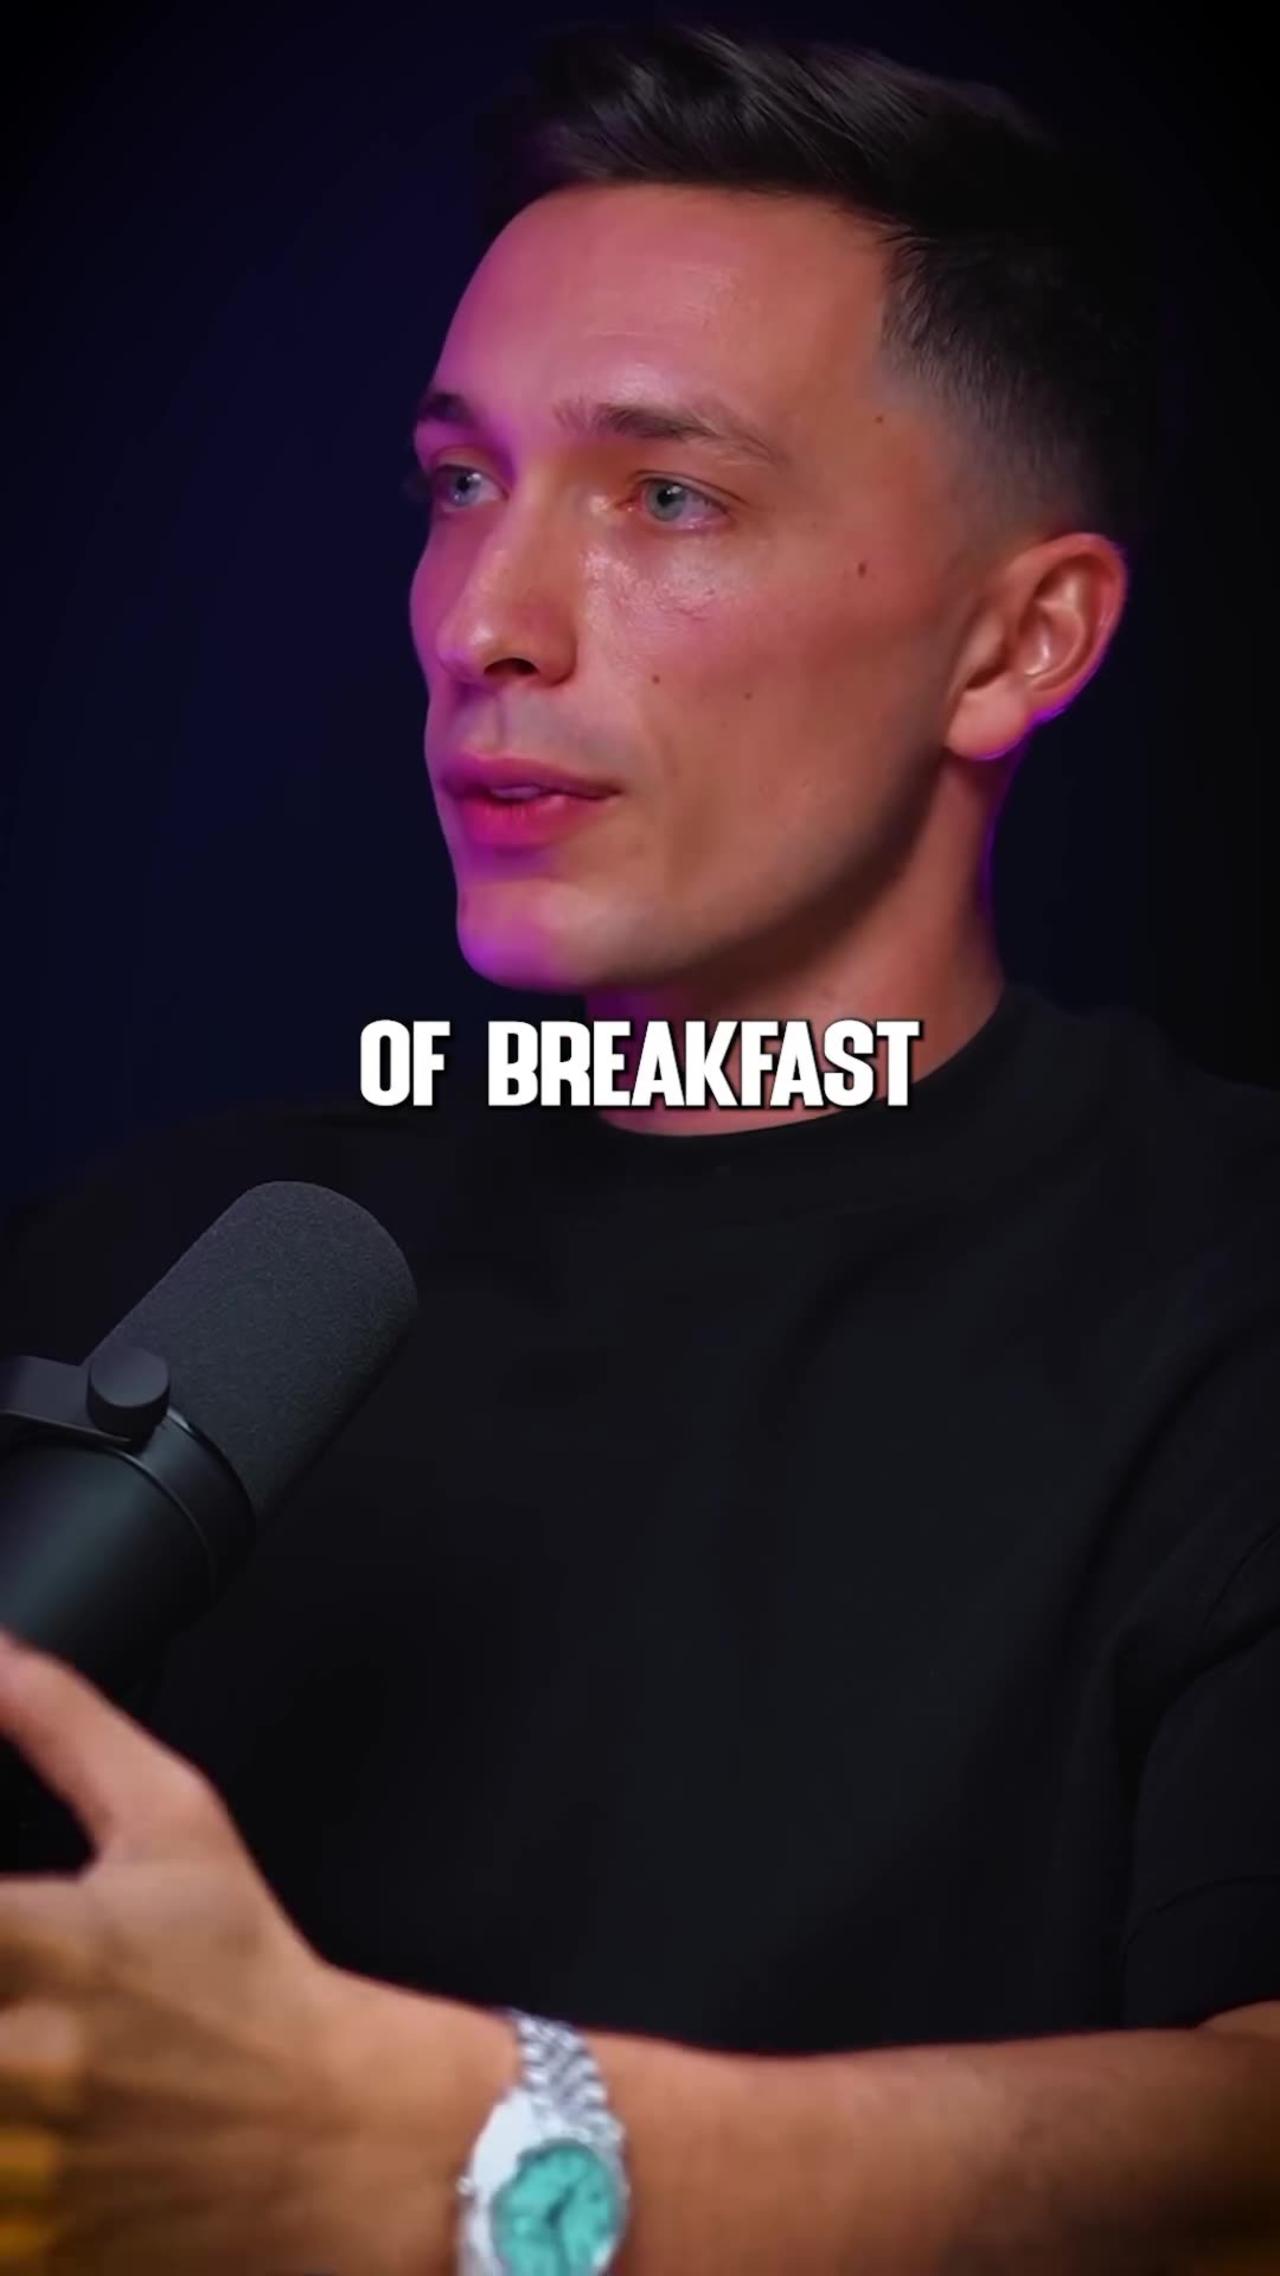 Edward Bernays and the Breakfast Propaganda